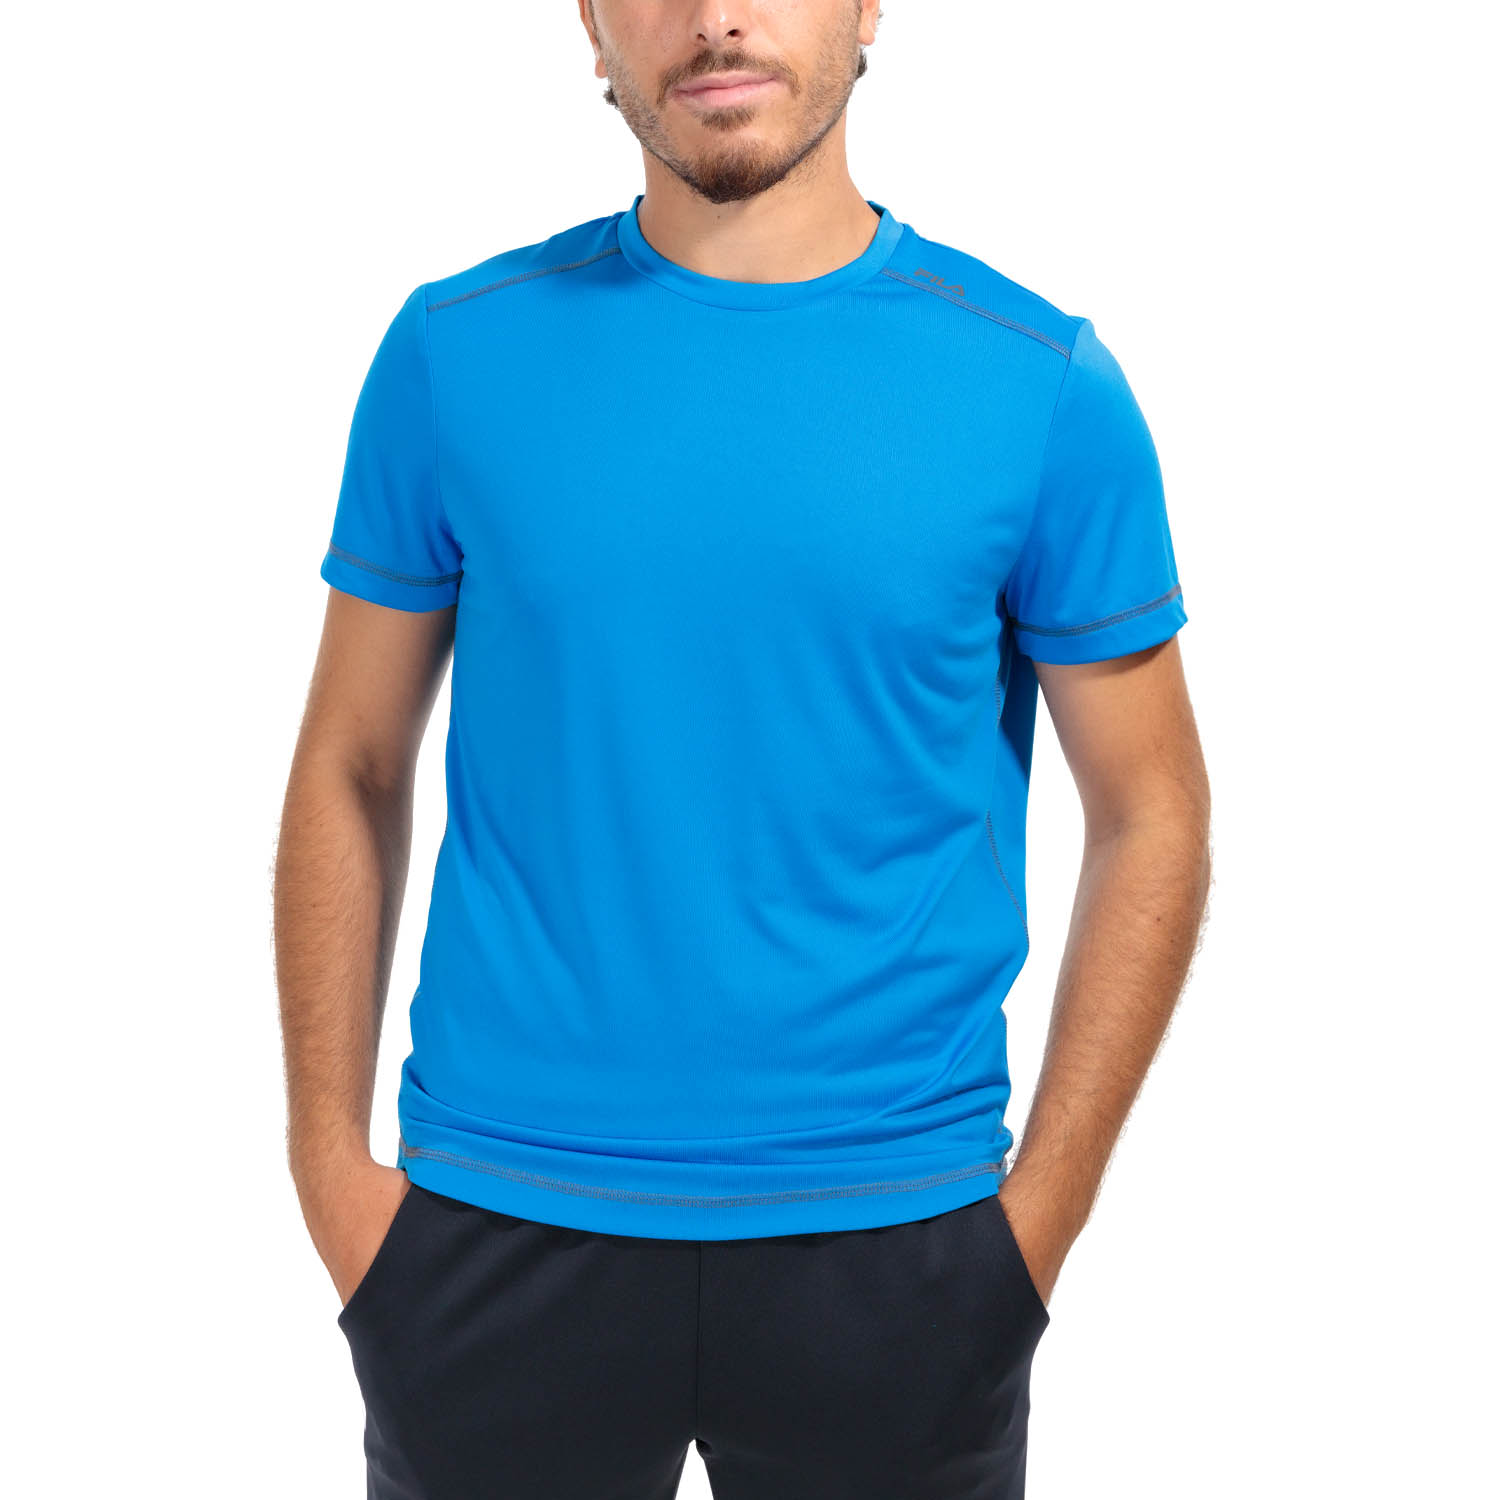 Fila Jannis T-Shirt - Simply Blue